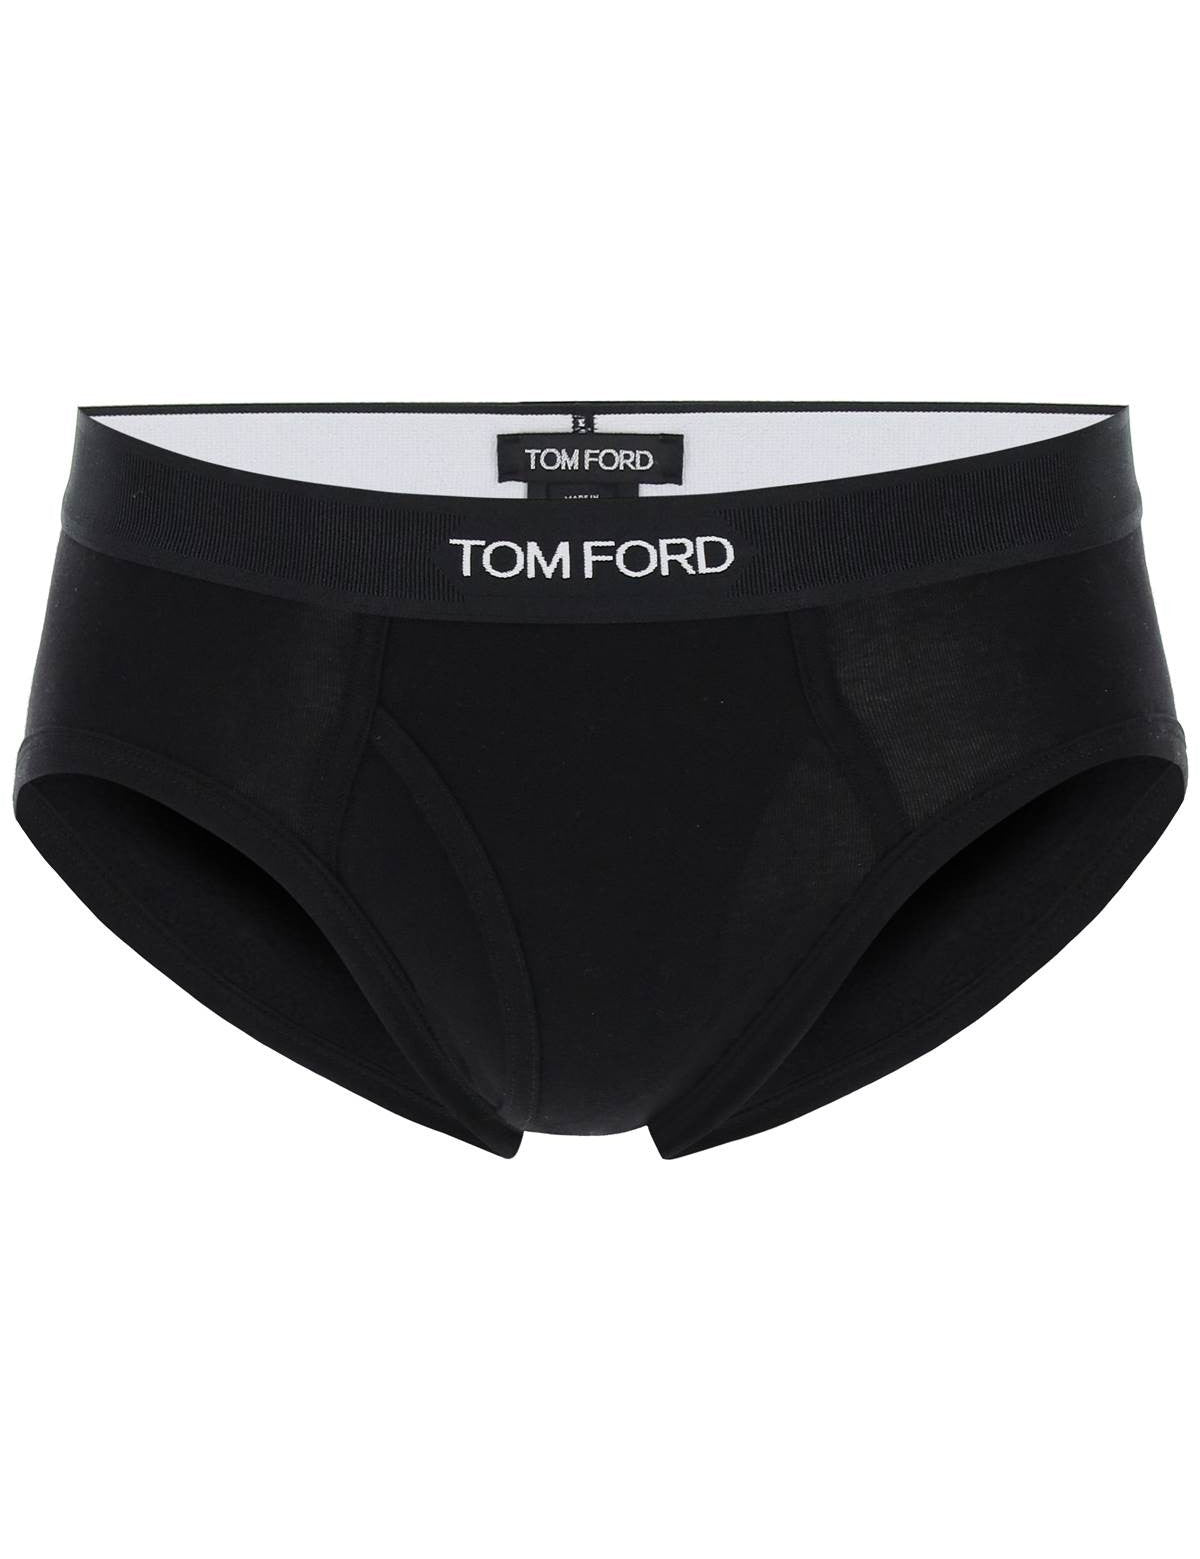 tom-ford-logo-band-slip-underwear-with-elastic.jpg